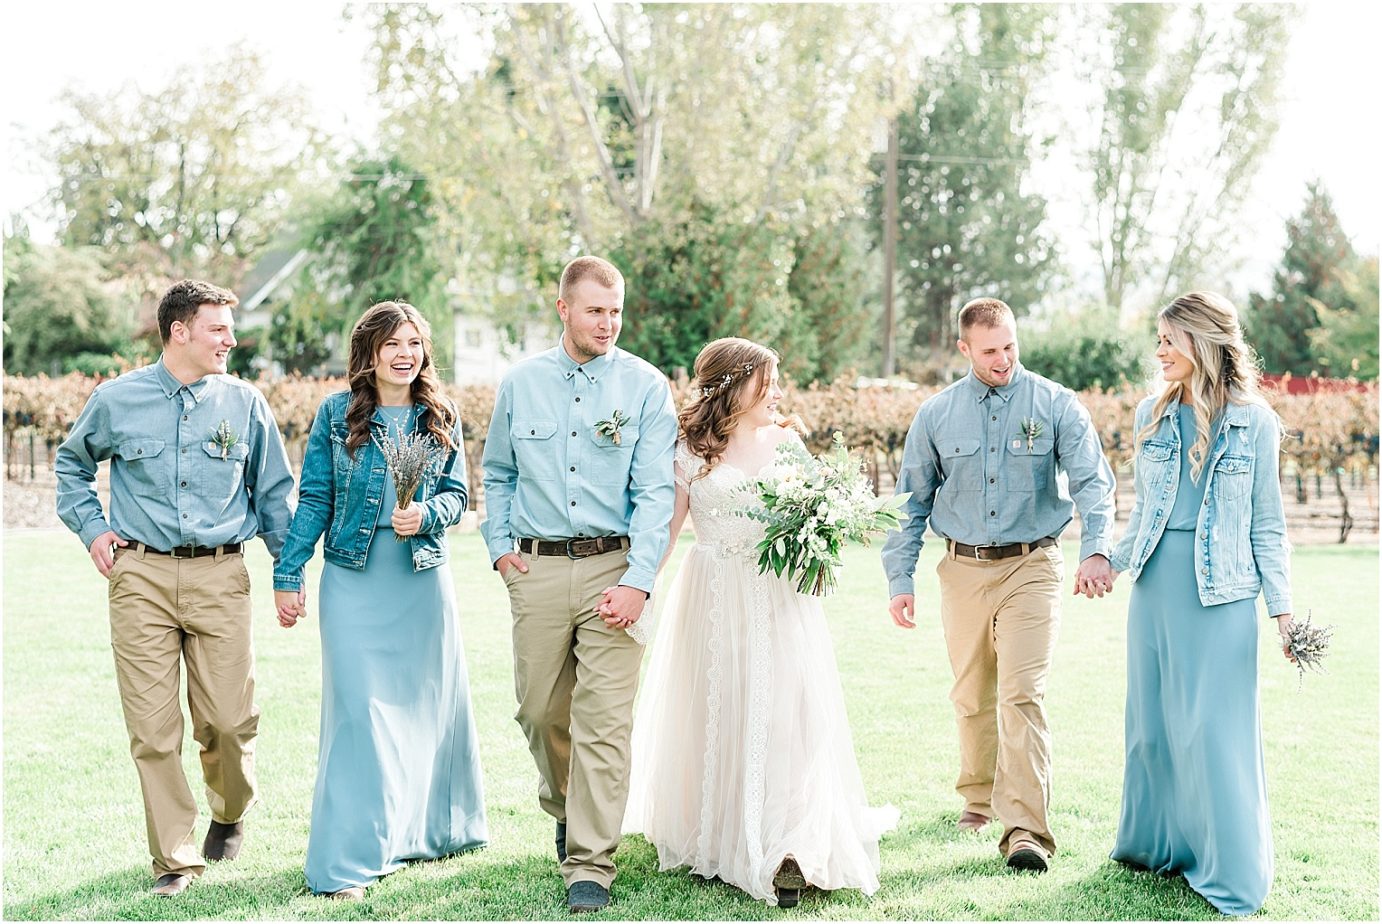 Sugar pine barn wedding tucannon cellars Brandon and Chloe bridal party in dusty blue dresses and khakis